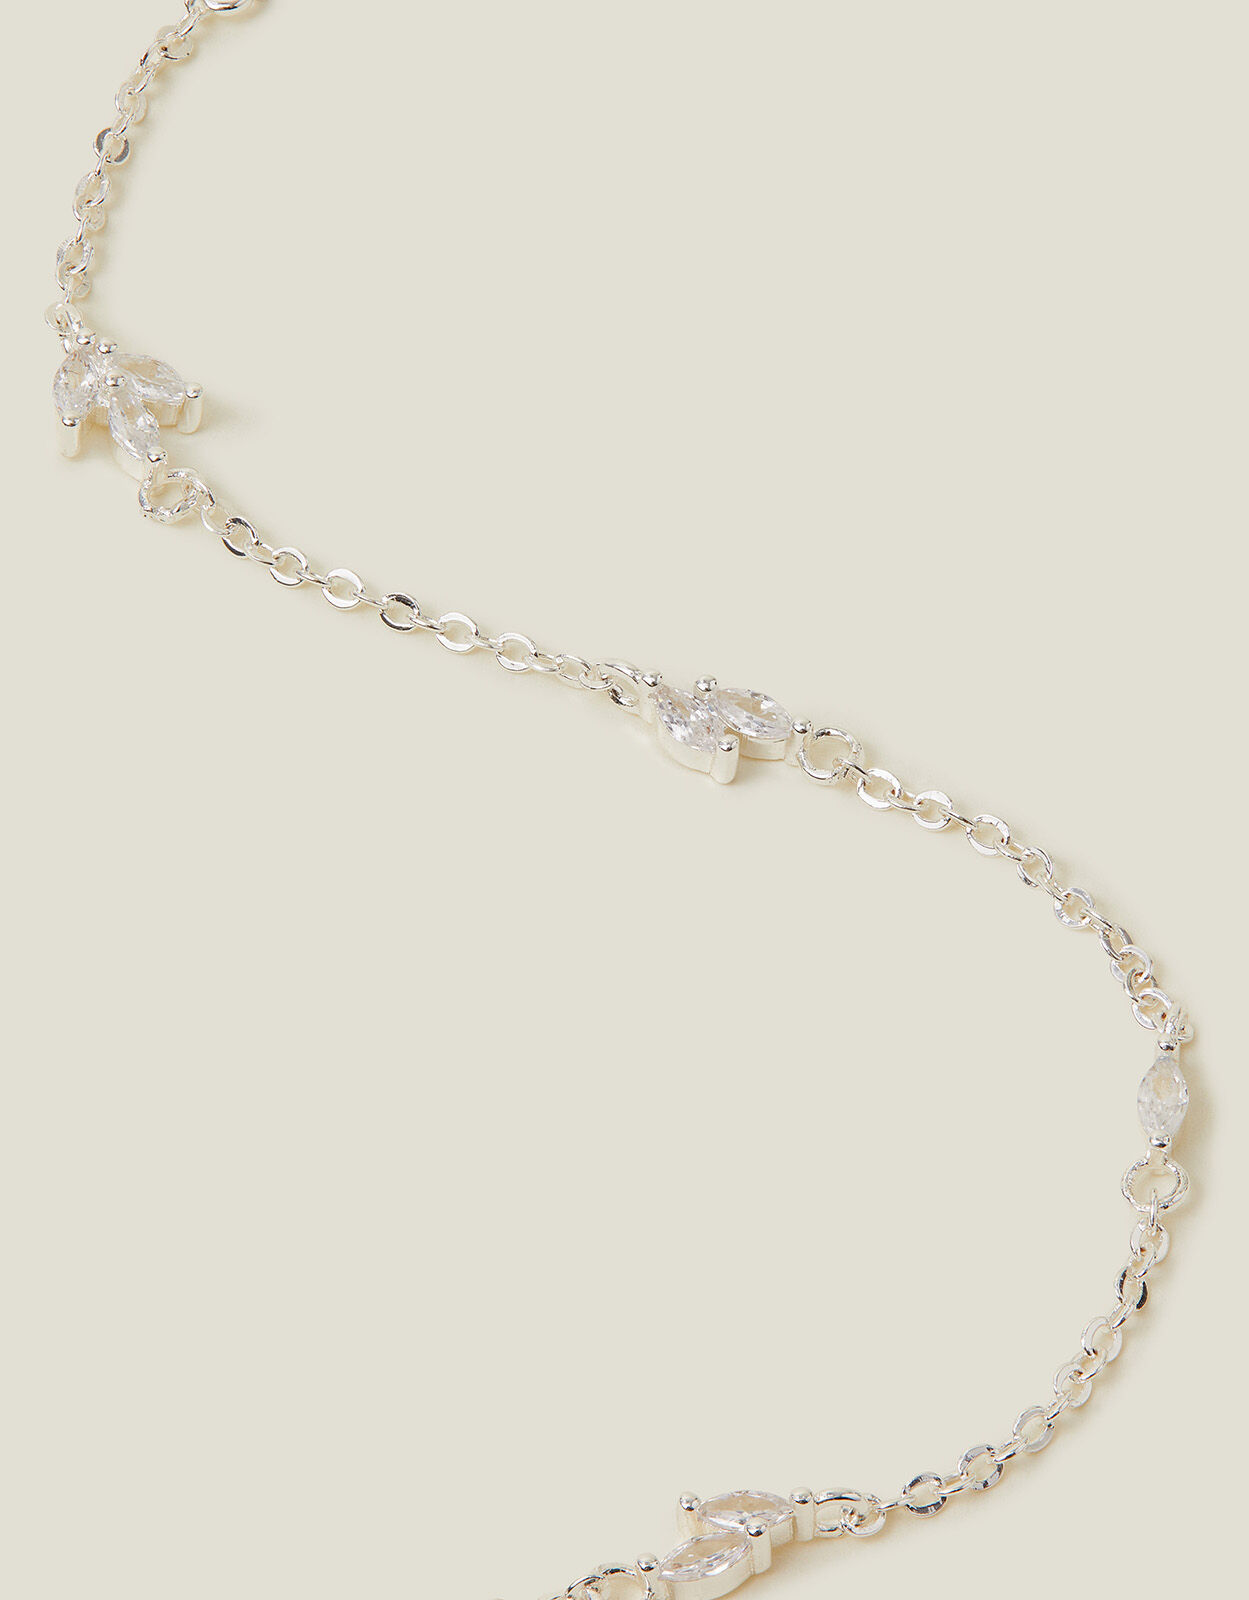 UK CRYSTAL CHOKER Collar Necklace Bow Knot Rhinestone Shiny Rose Gold  Tassel £3.49 - PicClick UK